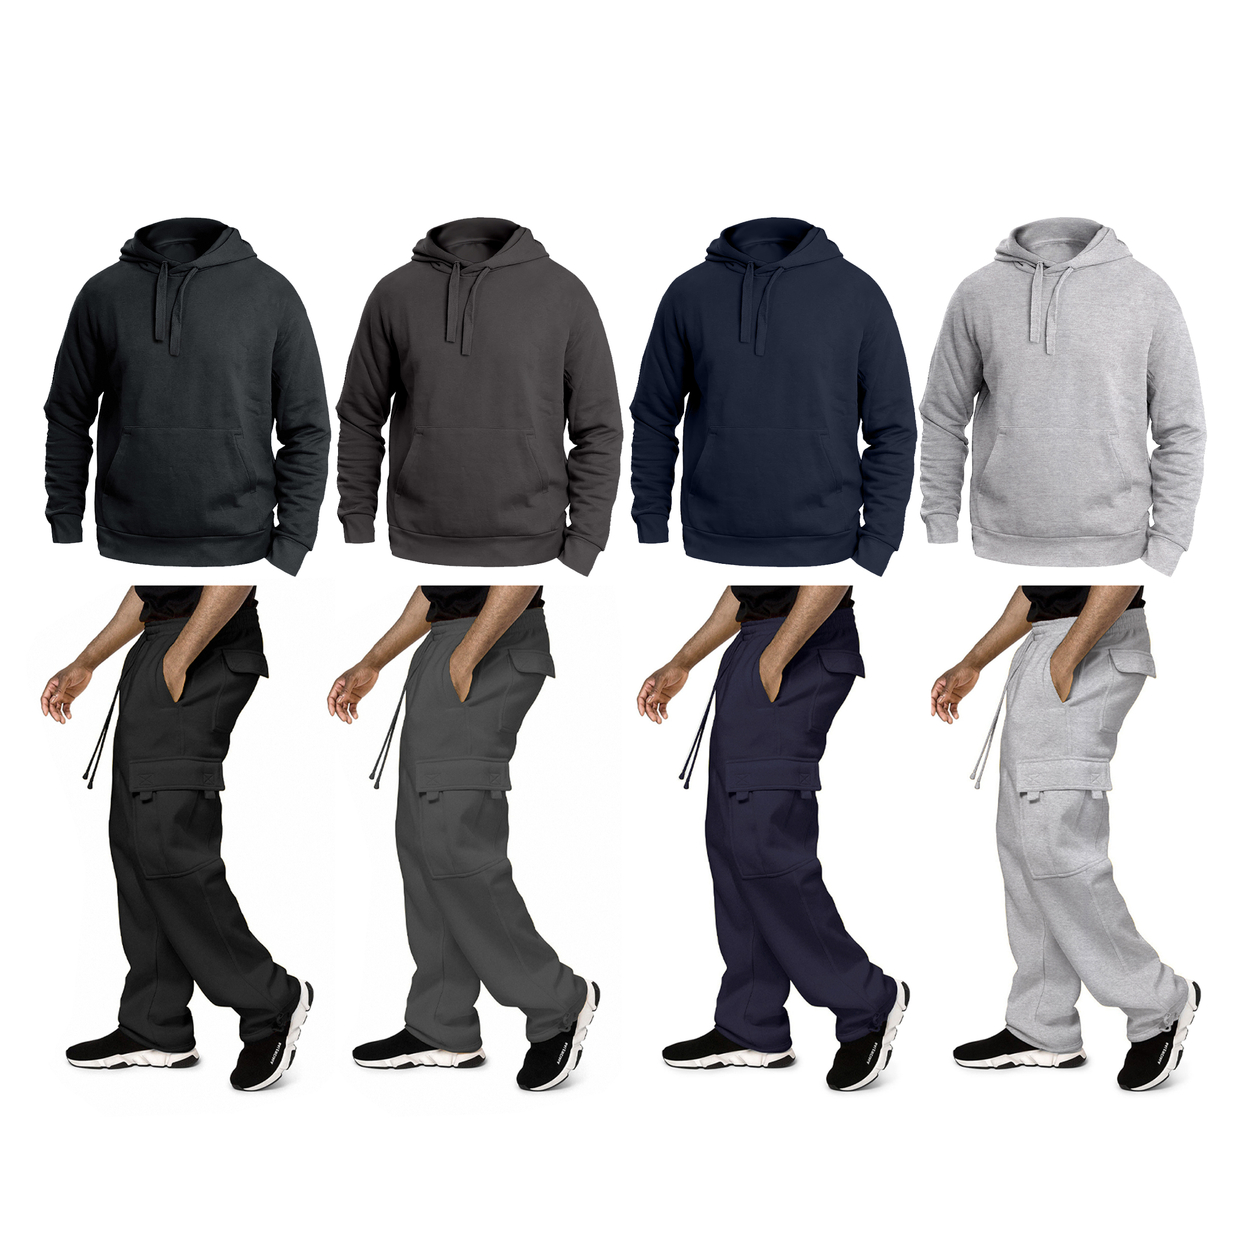 2-Pack: Men's Big & Tall Winter Warm Cozy Athletic Fleece Lined Multi-Pocket Cargo Sweatsuit - Navy, 3xl